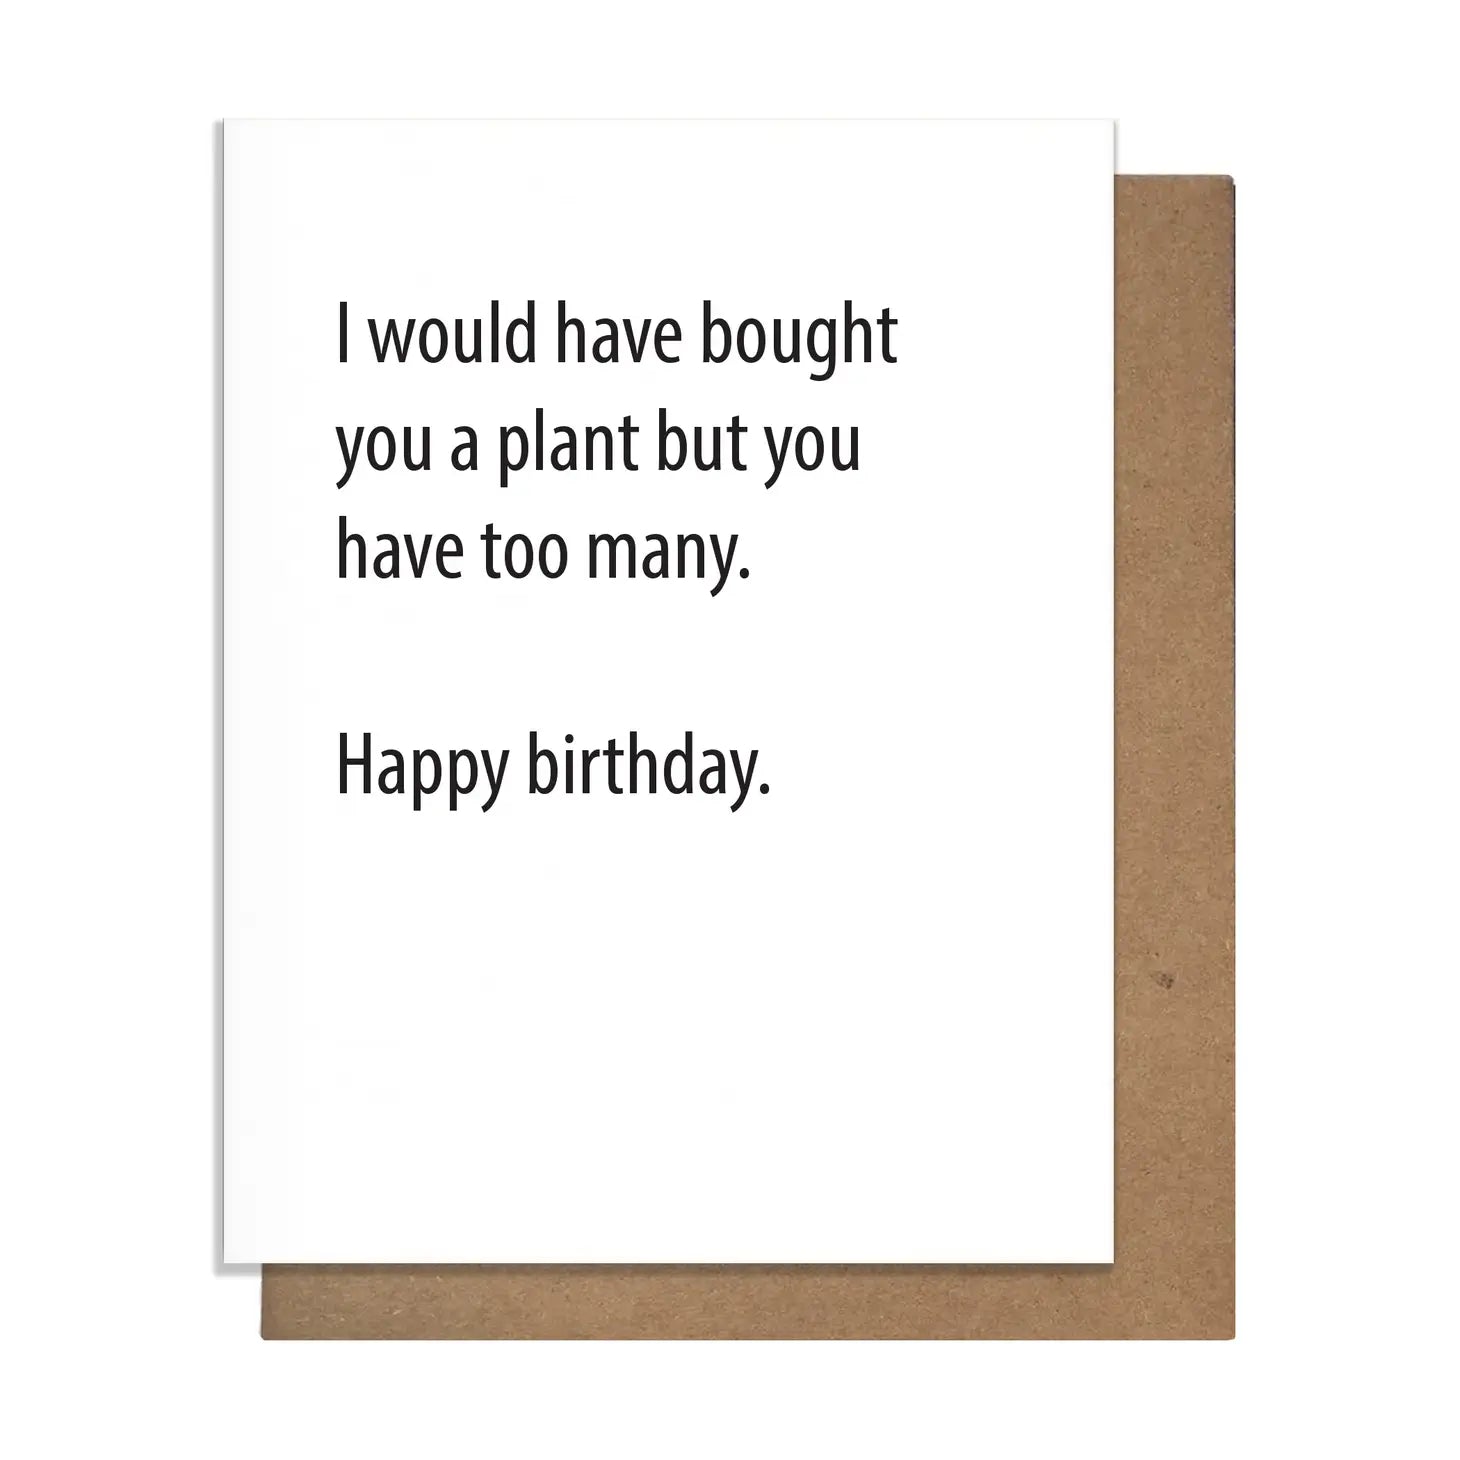 Too many plants birthday card - Greeting Card